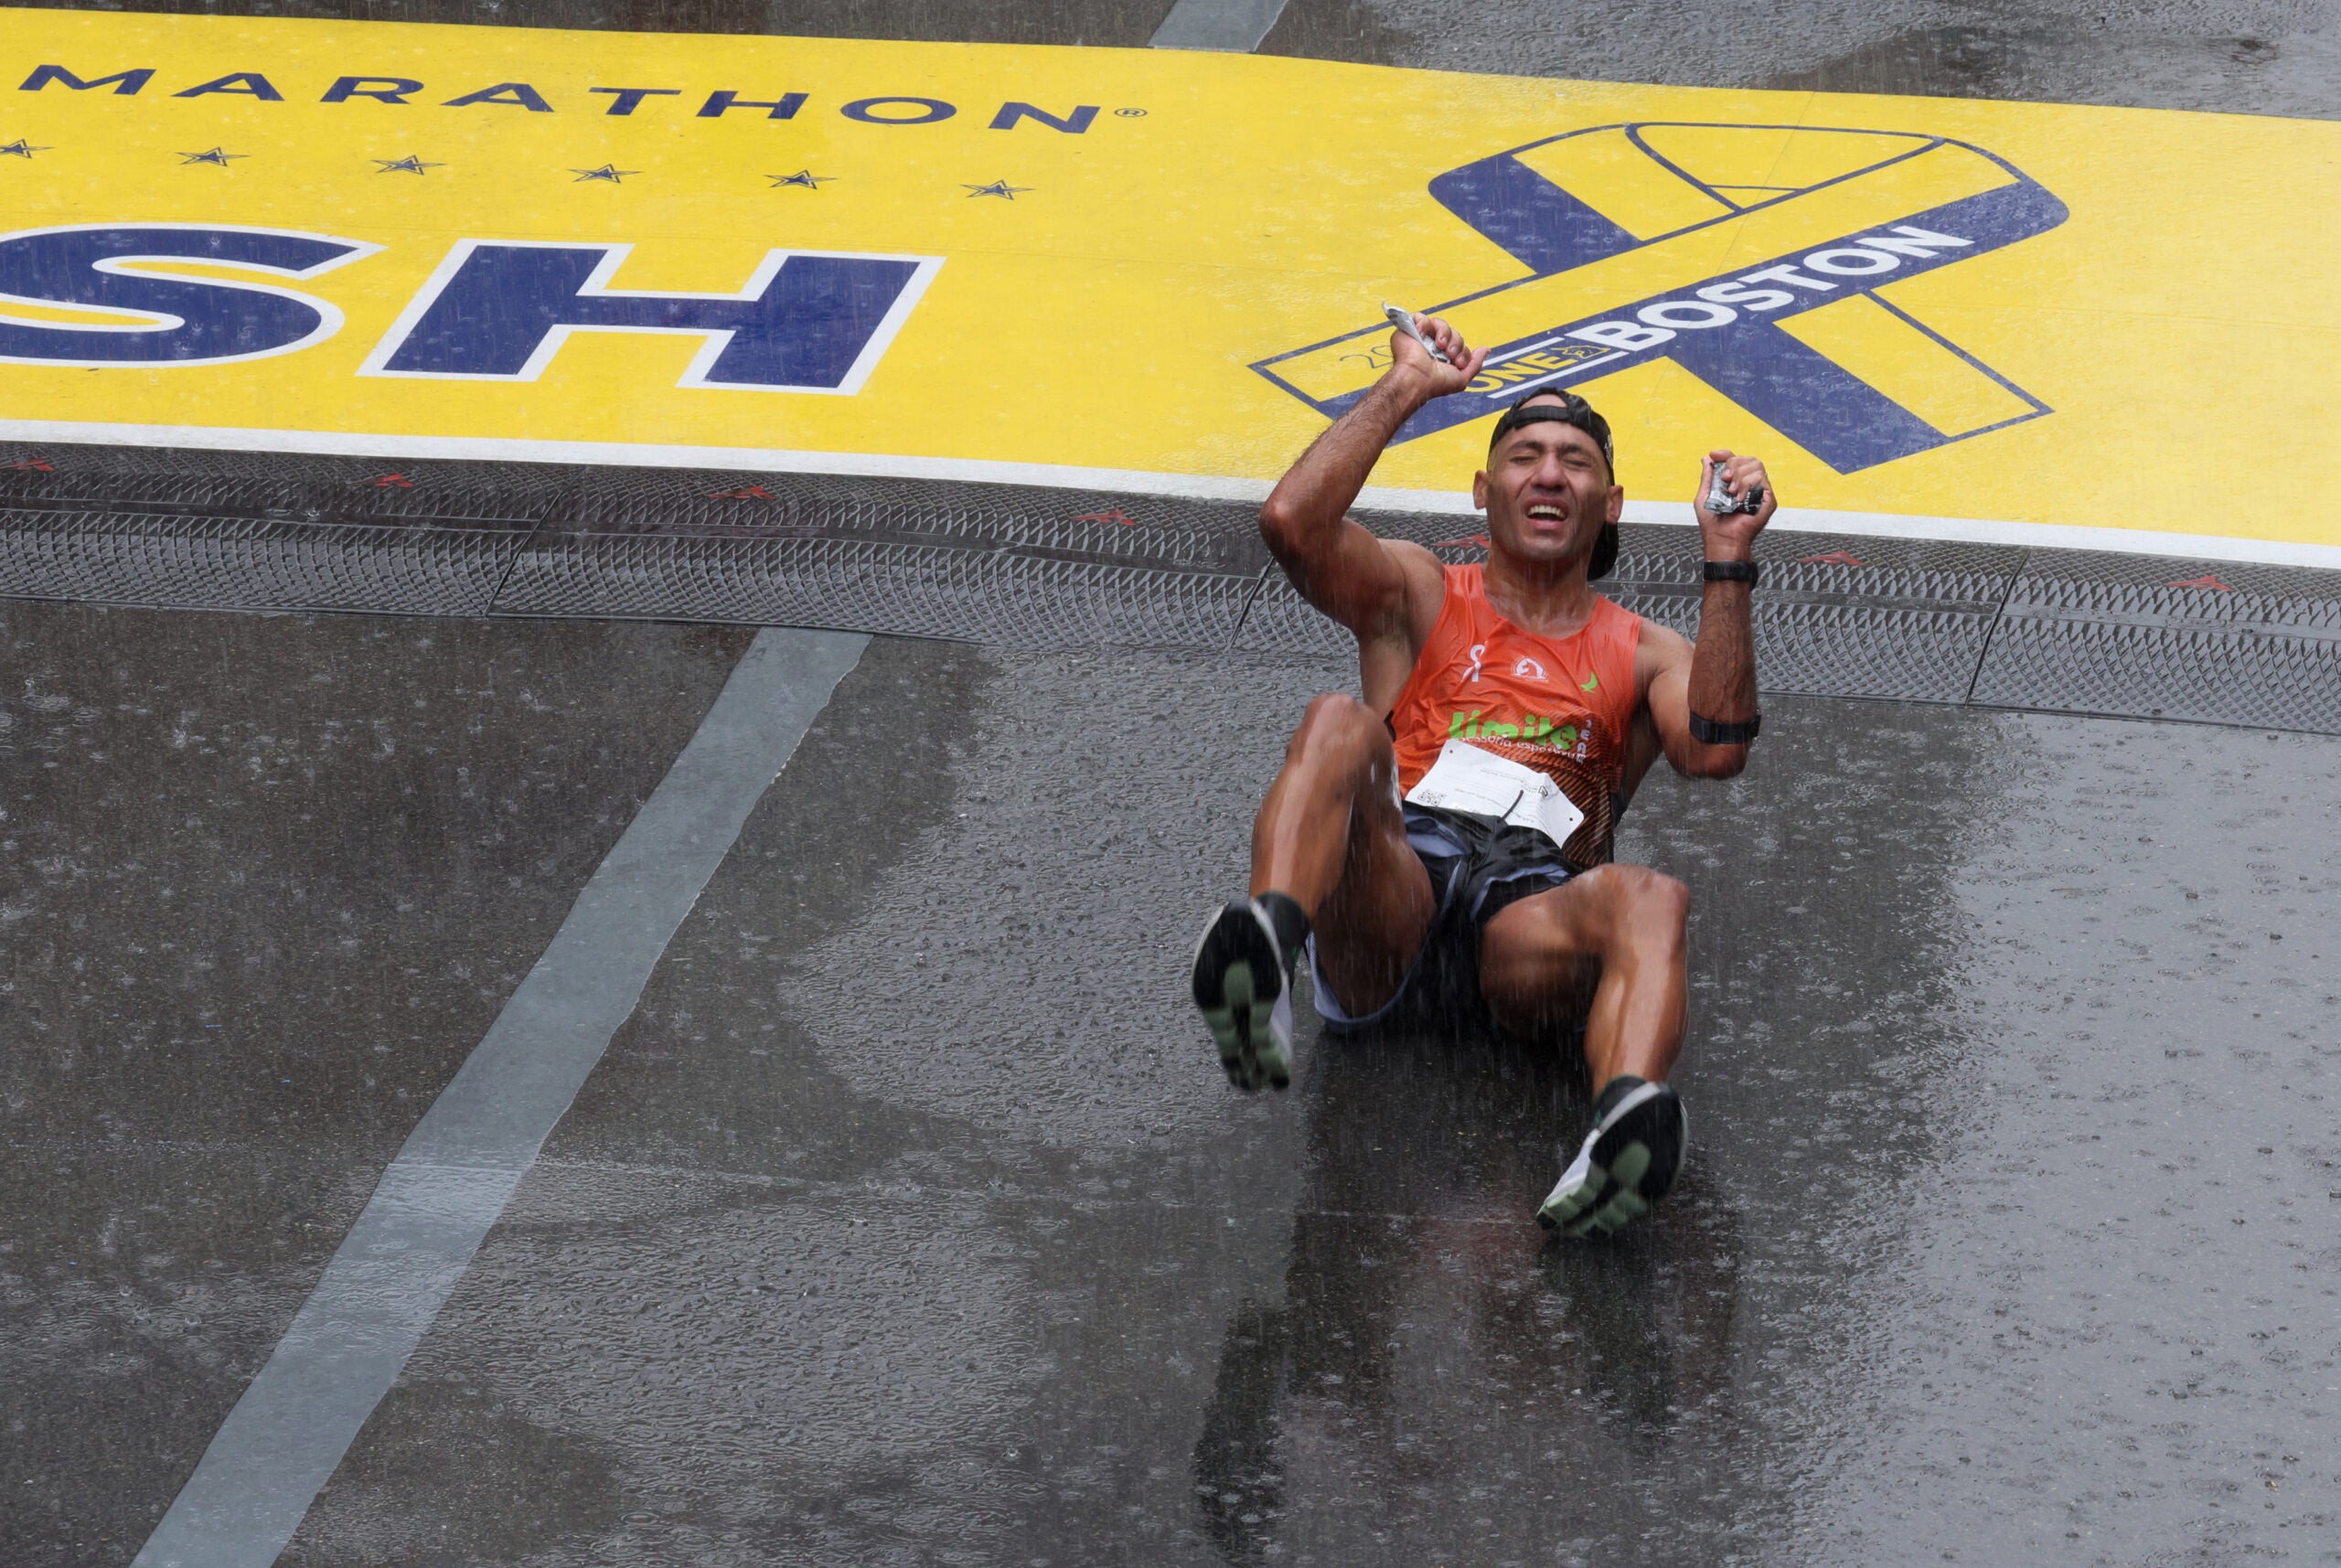 A runner somersaults across the Finish Line as rain falls at the Boston Marathon.